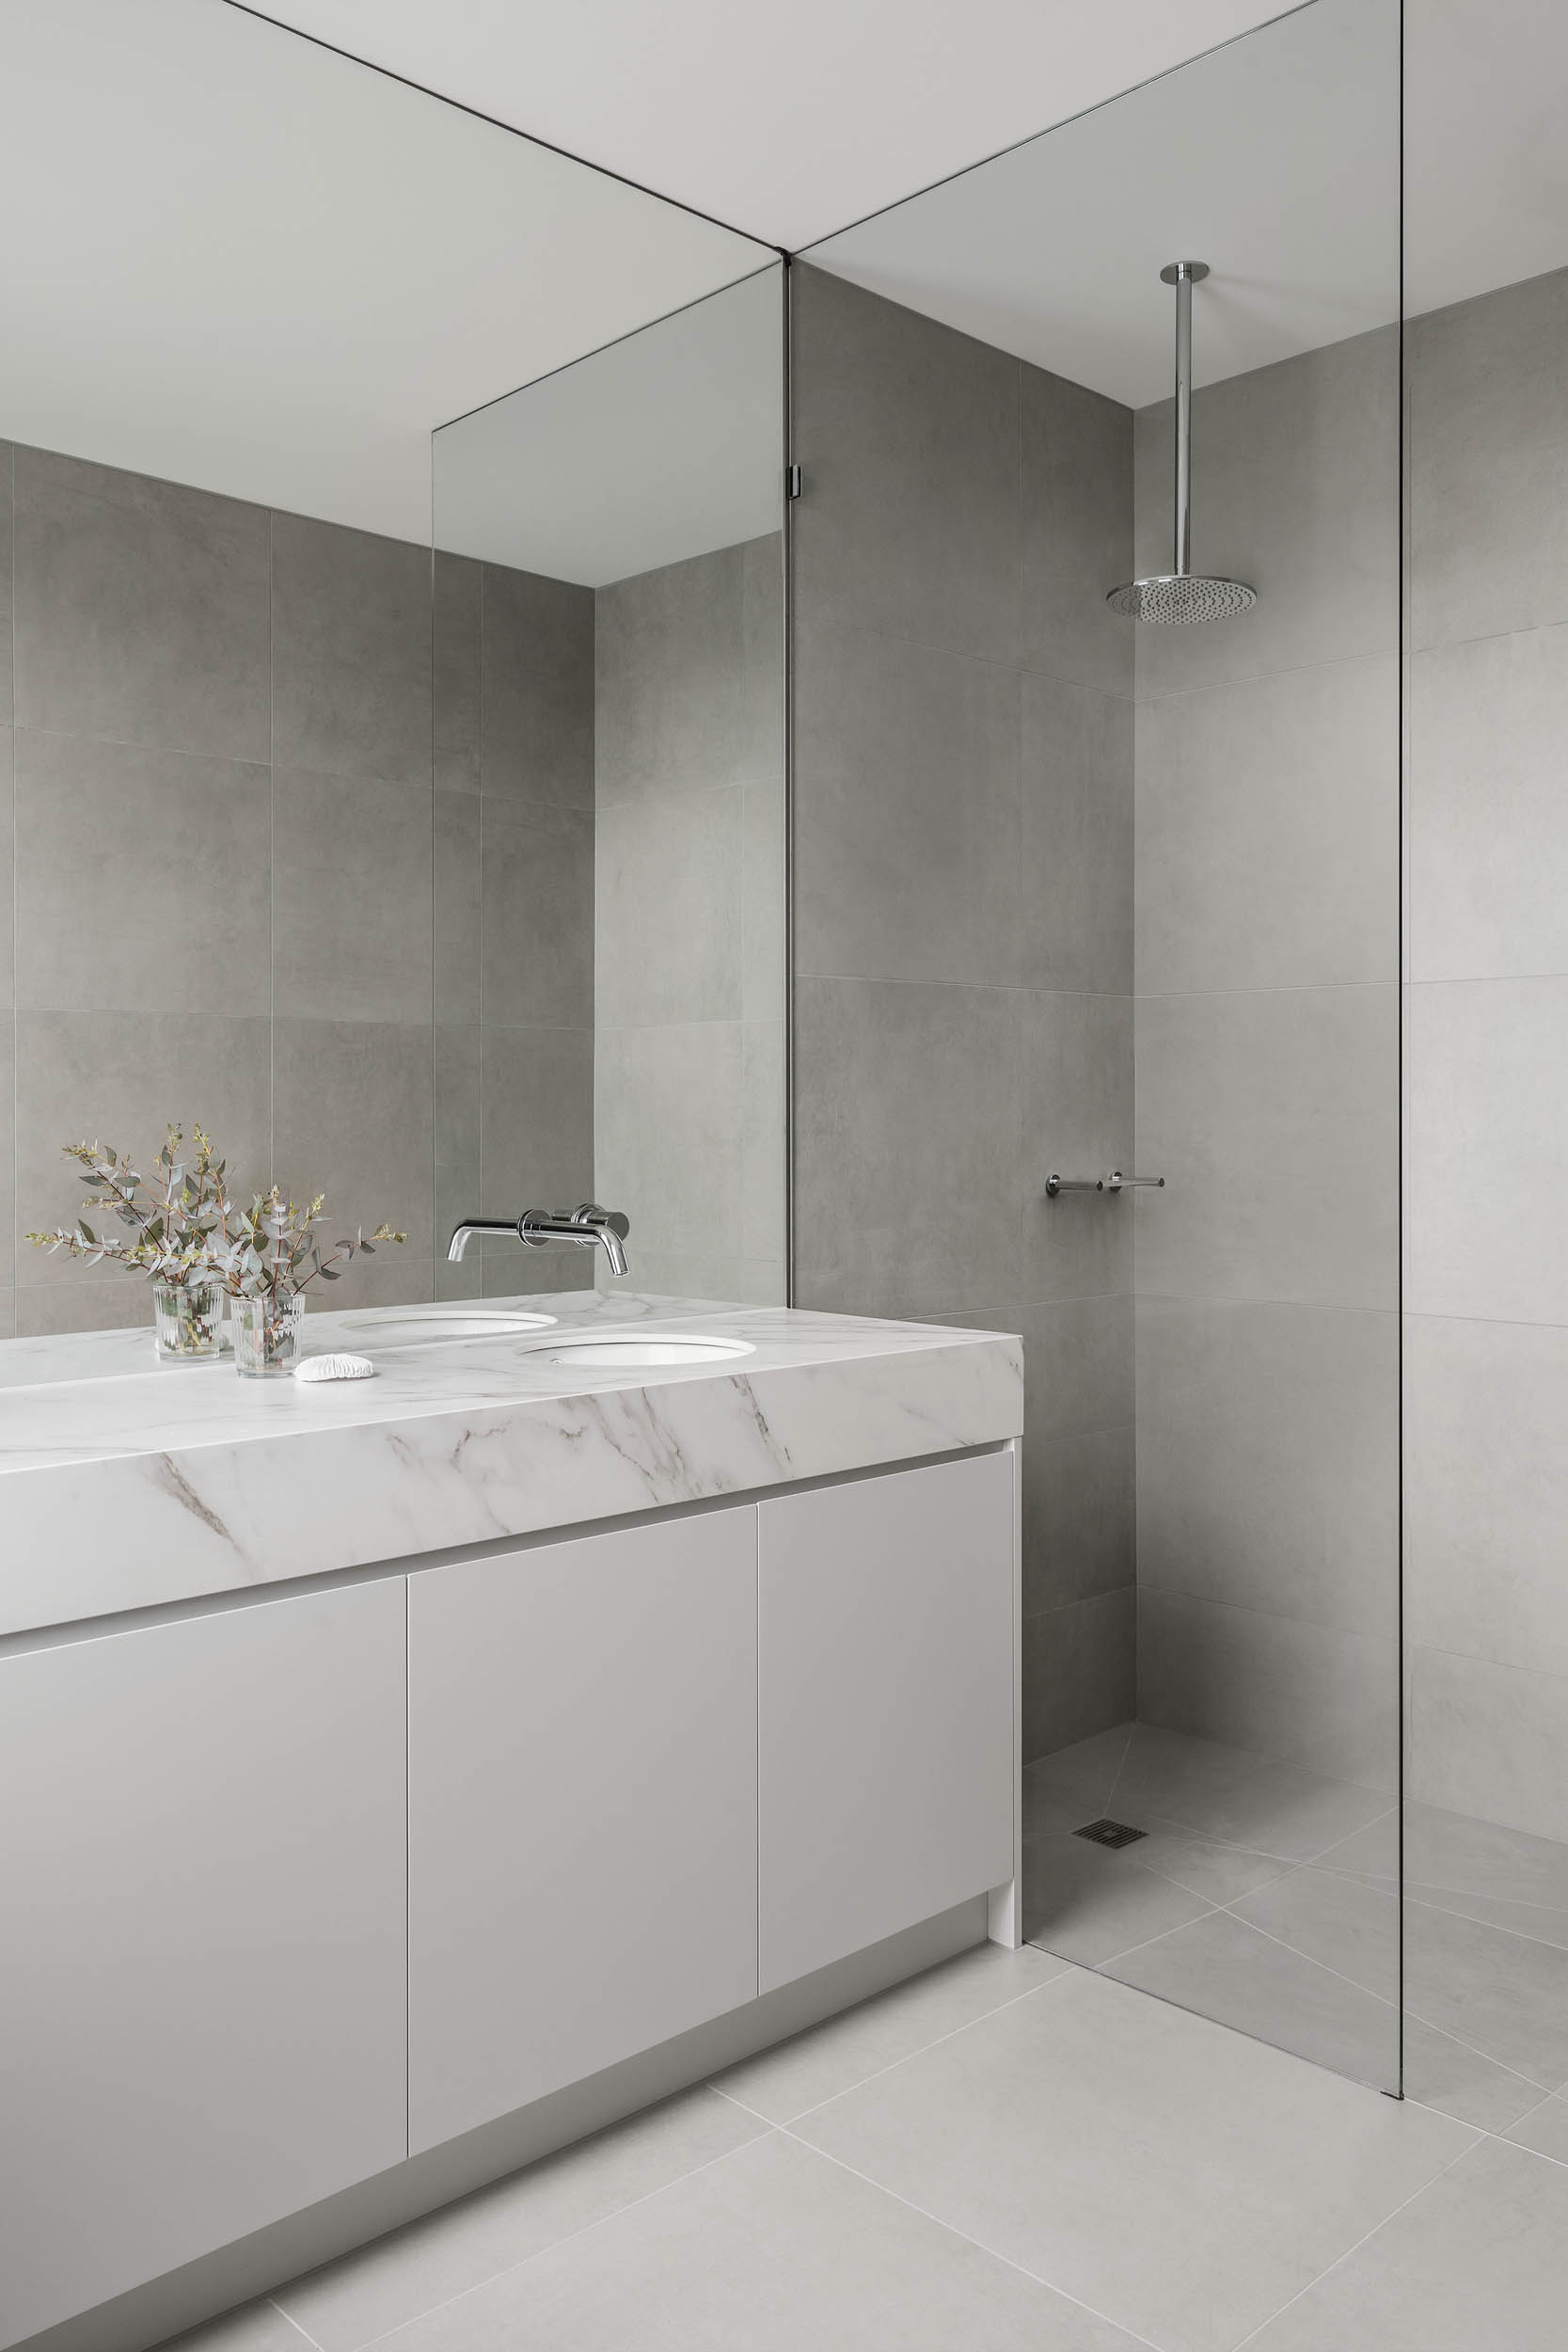 penthouse-bathroom-interior-kew-multi-residential-development-ckairouz-architects2